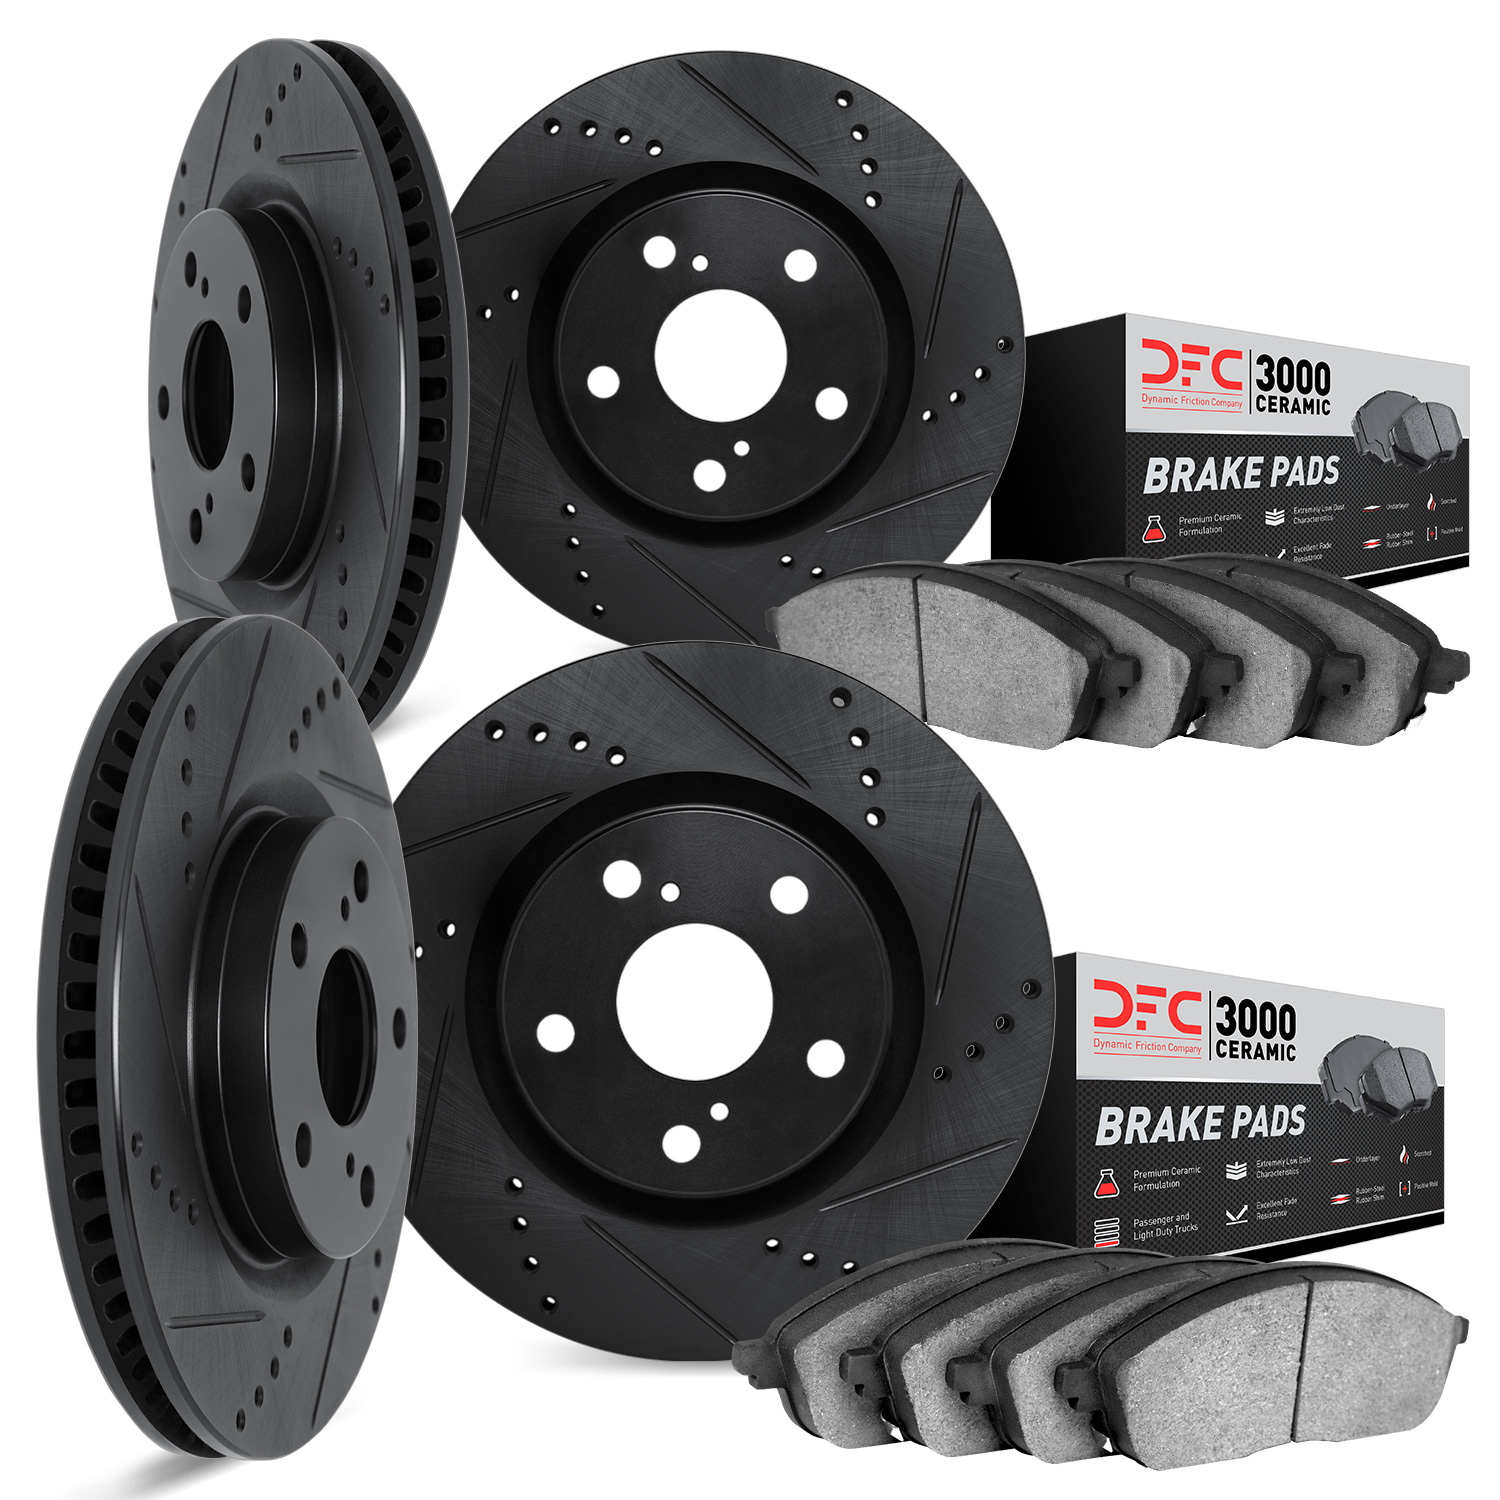 8304-54089 Drilled/Slotted Brake Rotors with 3000-Series Ceramic Brake Pads Kit [Black], 2005-2014 Ford/Lincoln/Mercury/Mazda, P